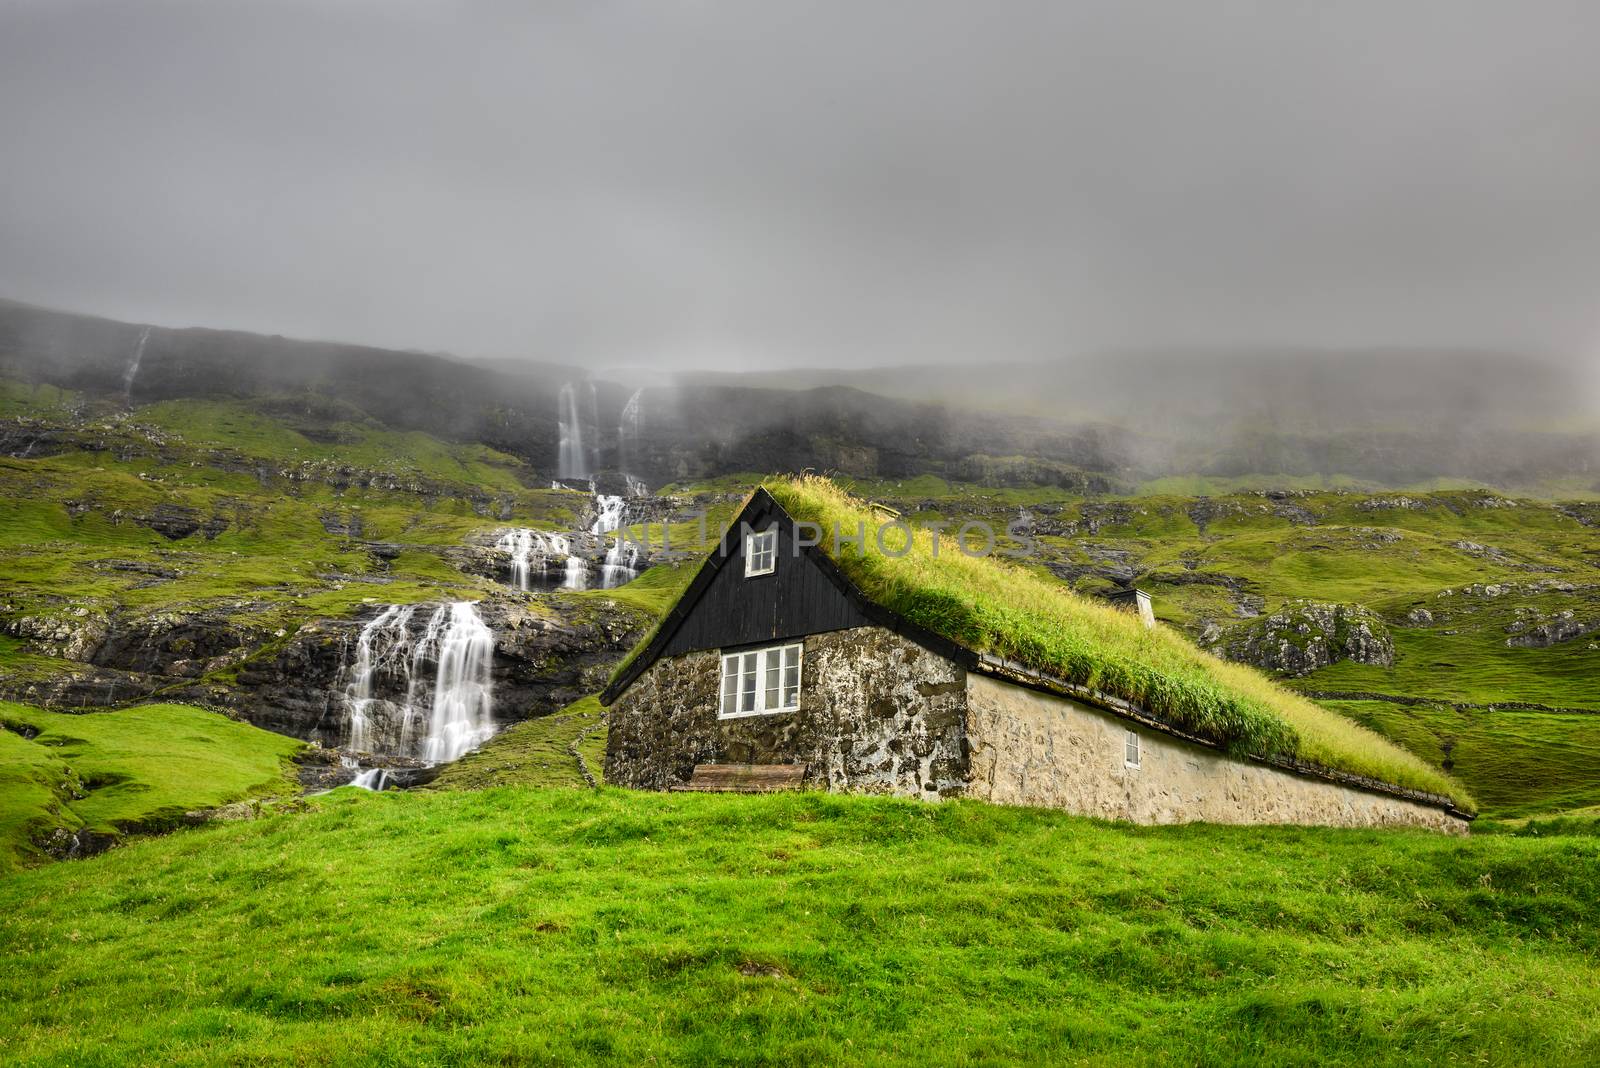 Historic stone house in Faroe Islands by nickfox